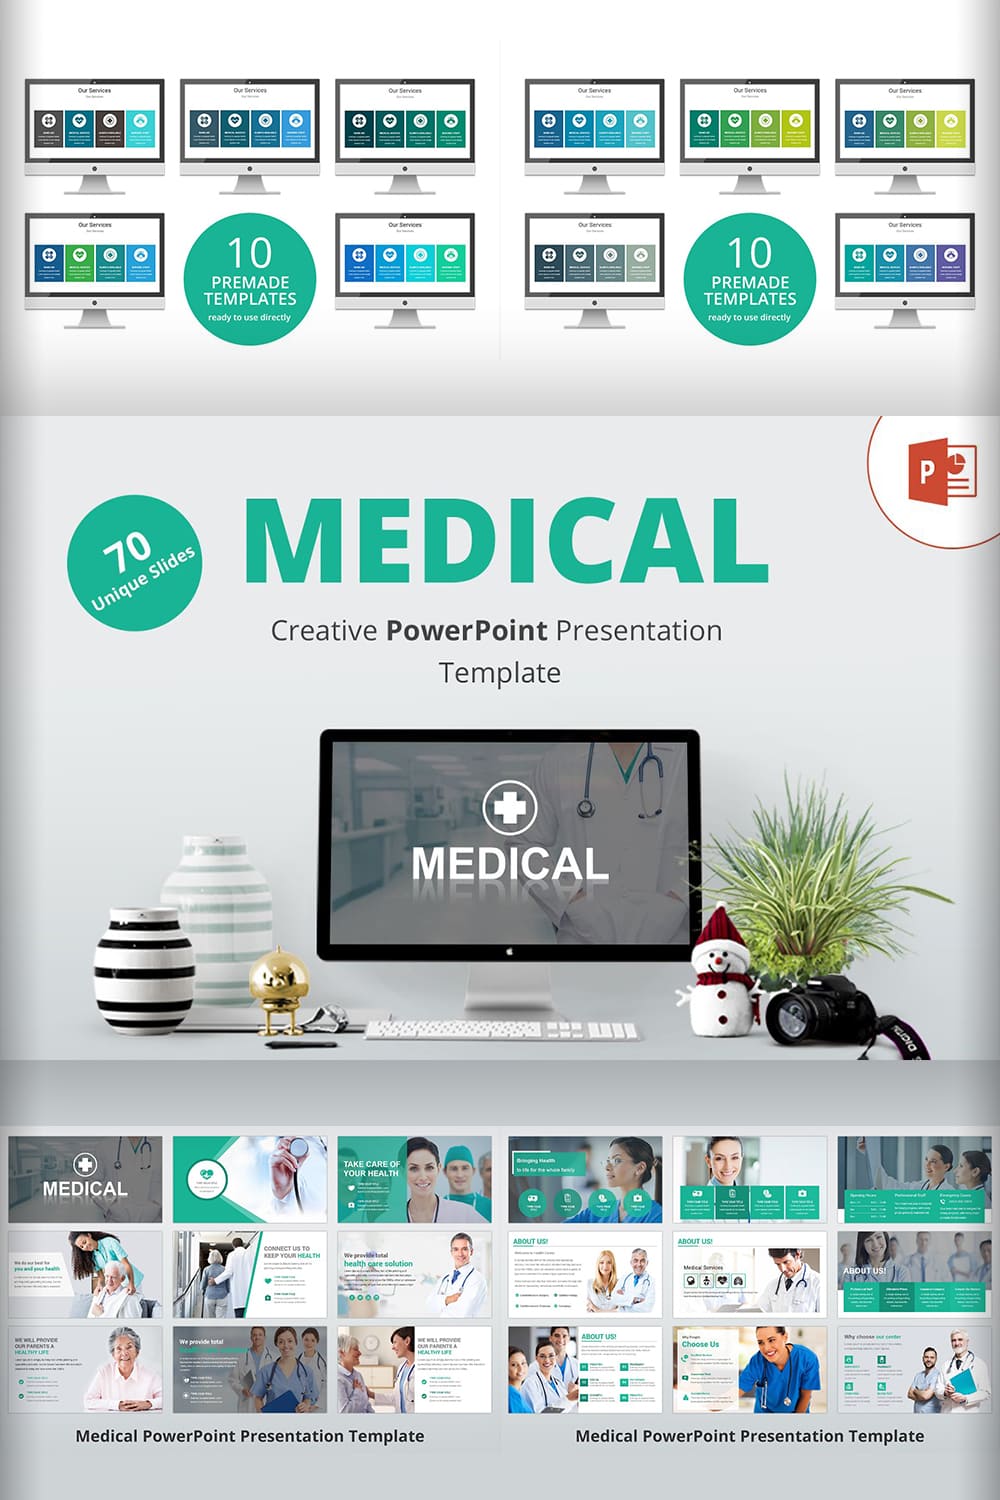 Pinterest - Medical PowerPoint Template.